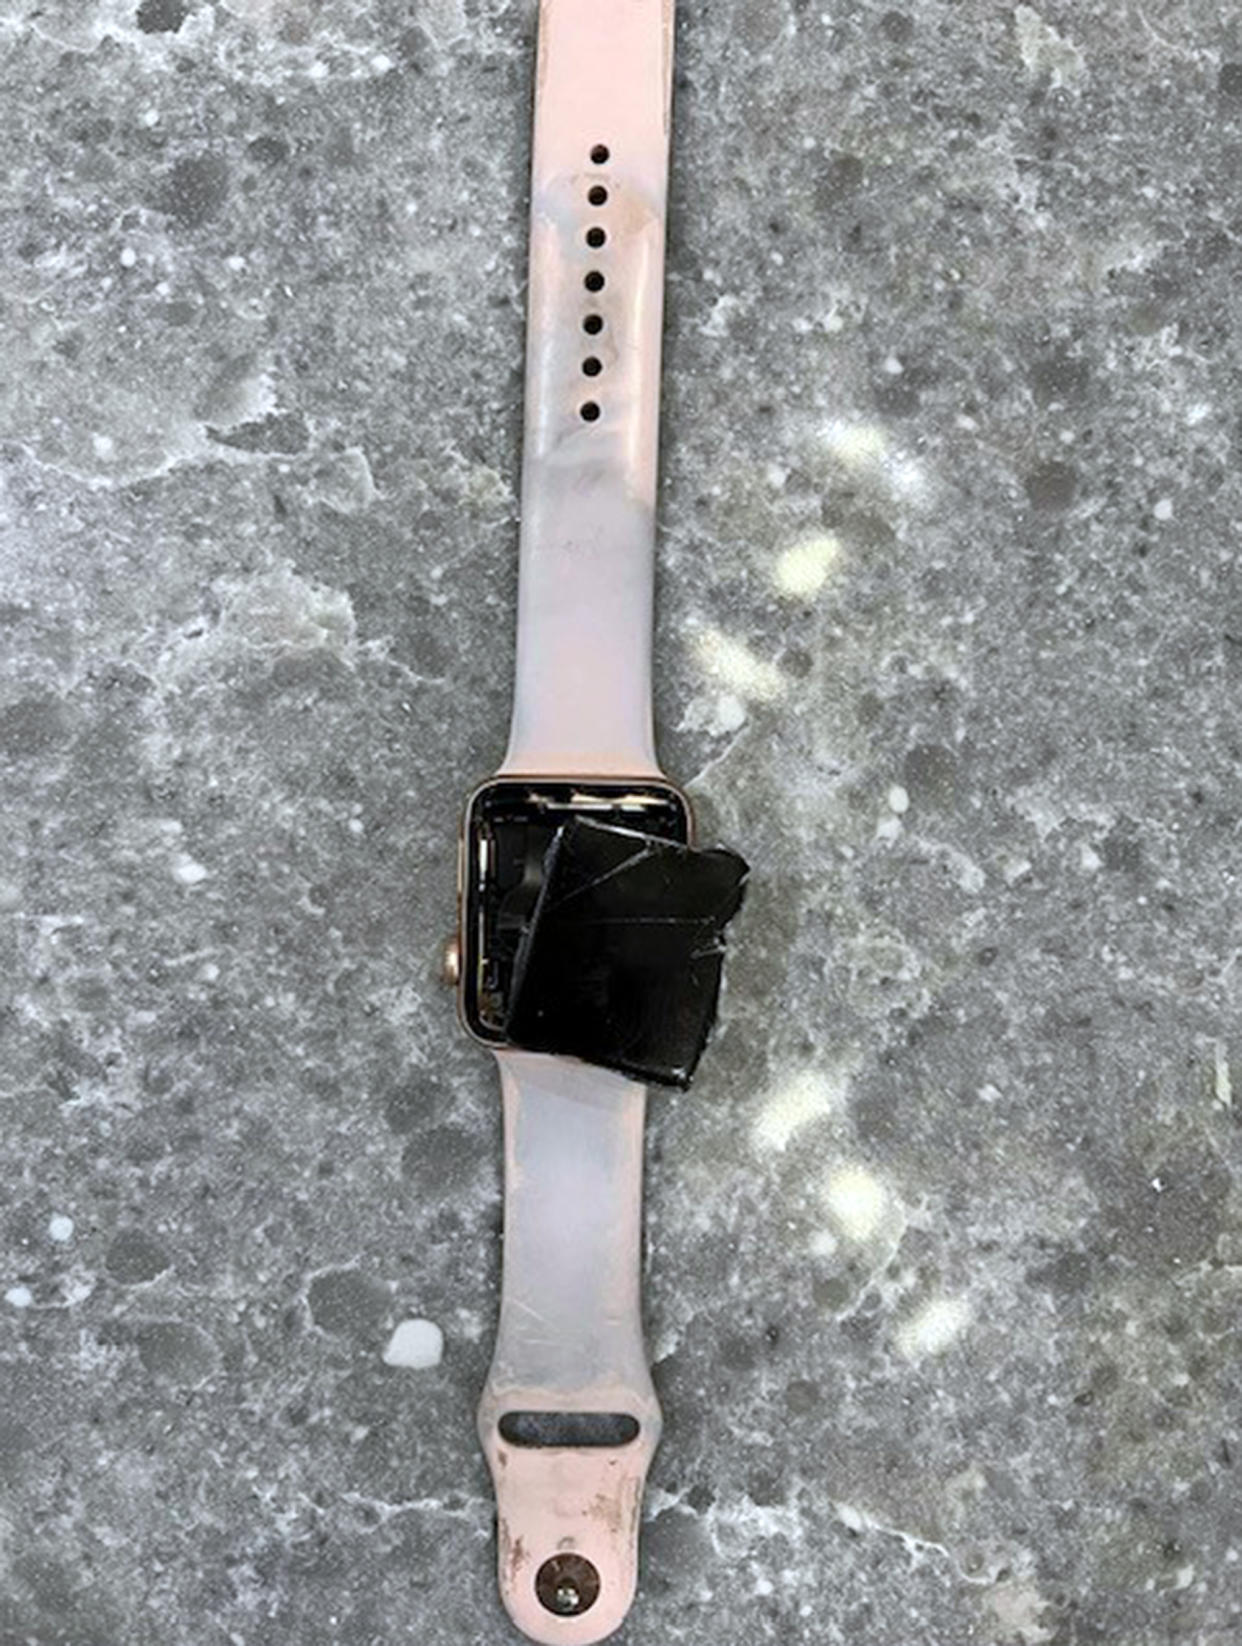 Eggler's Apple Watch exploded during the incident. (Courtesy Emma Eggler)